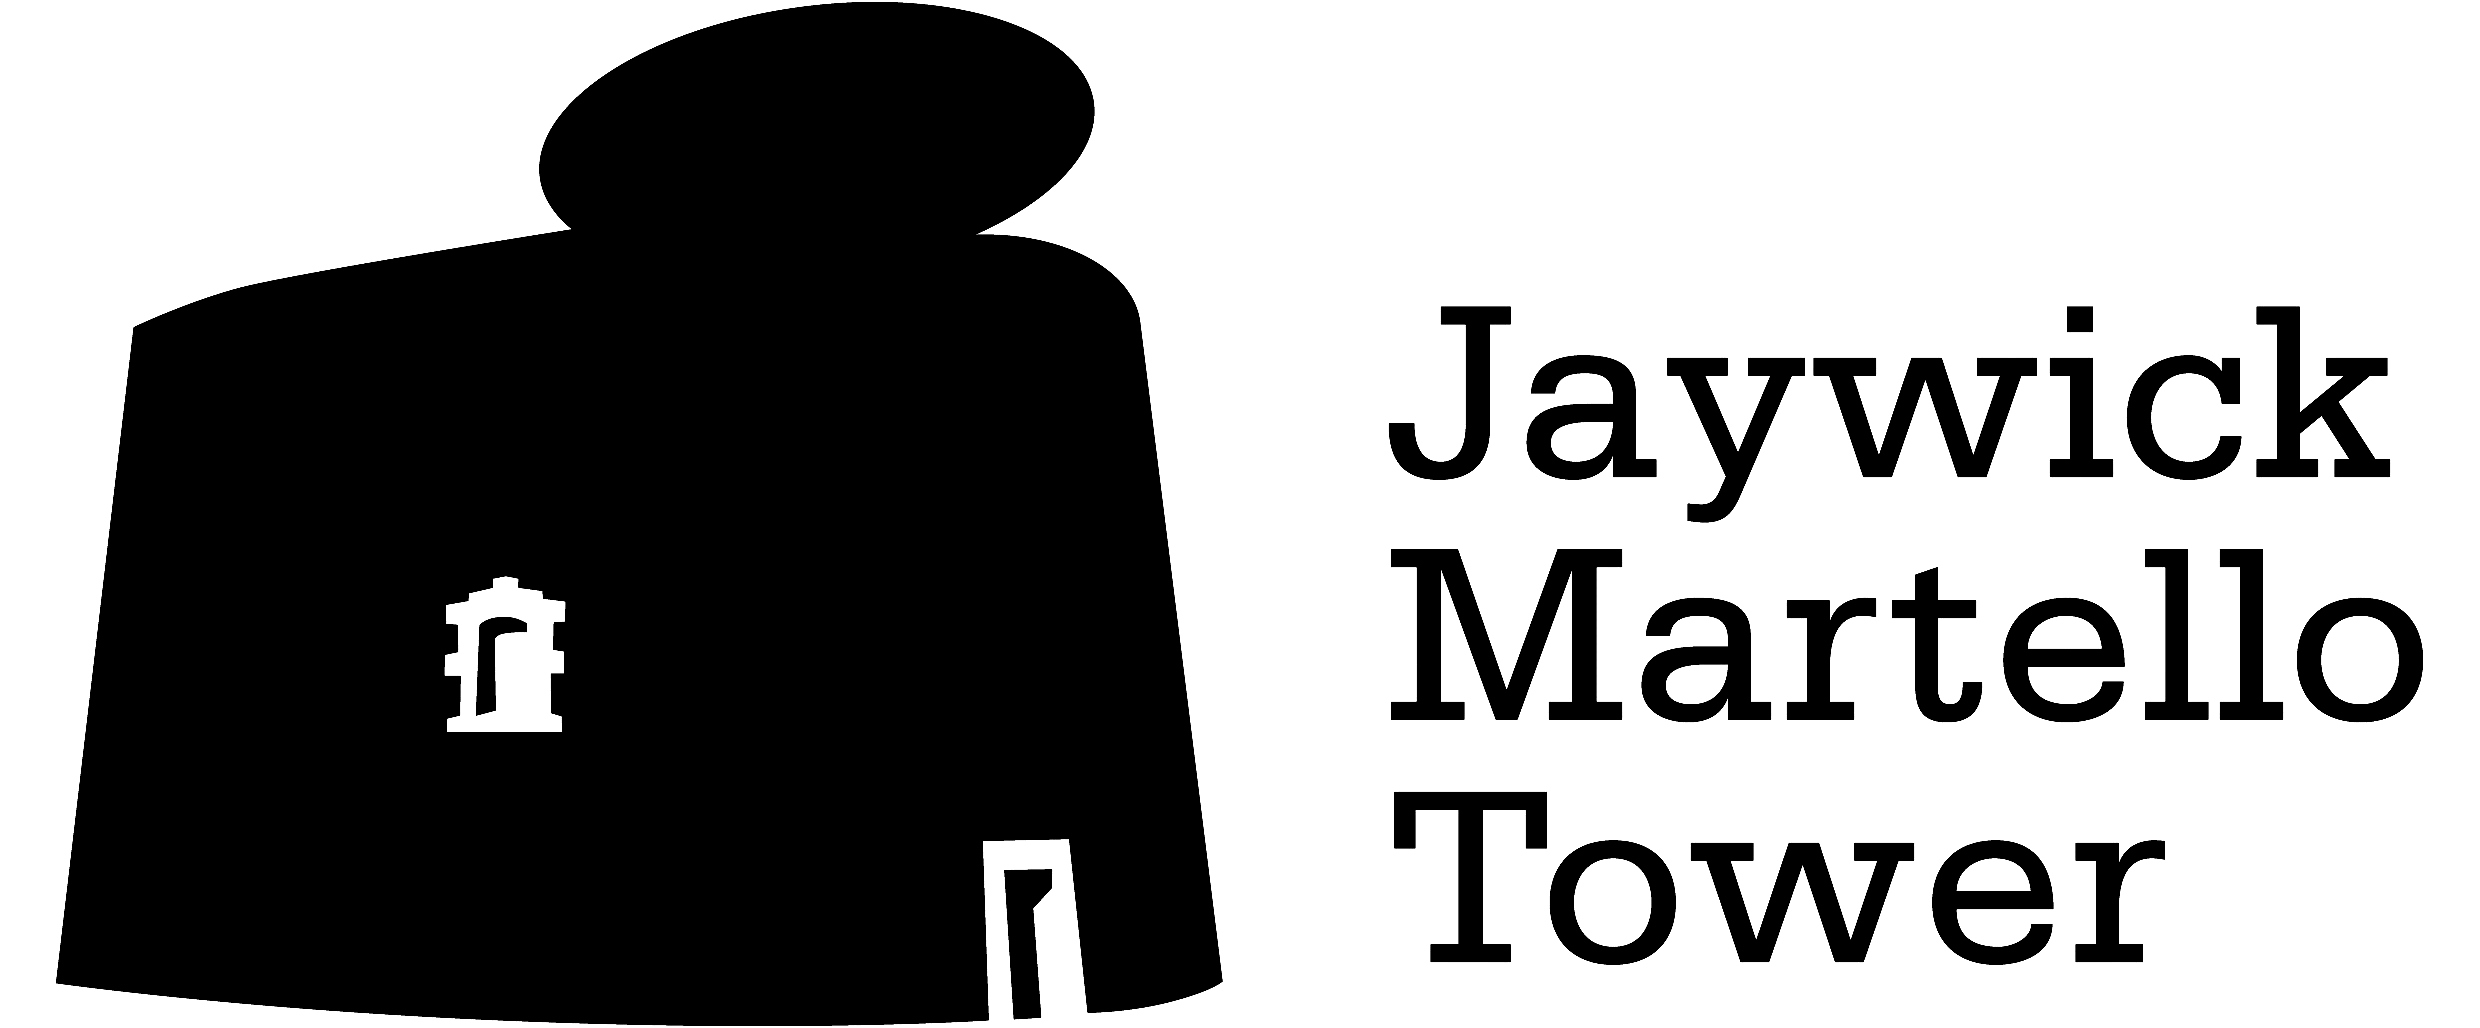 Logo for Jaywick Martello tower